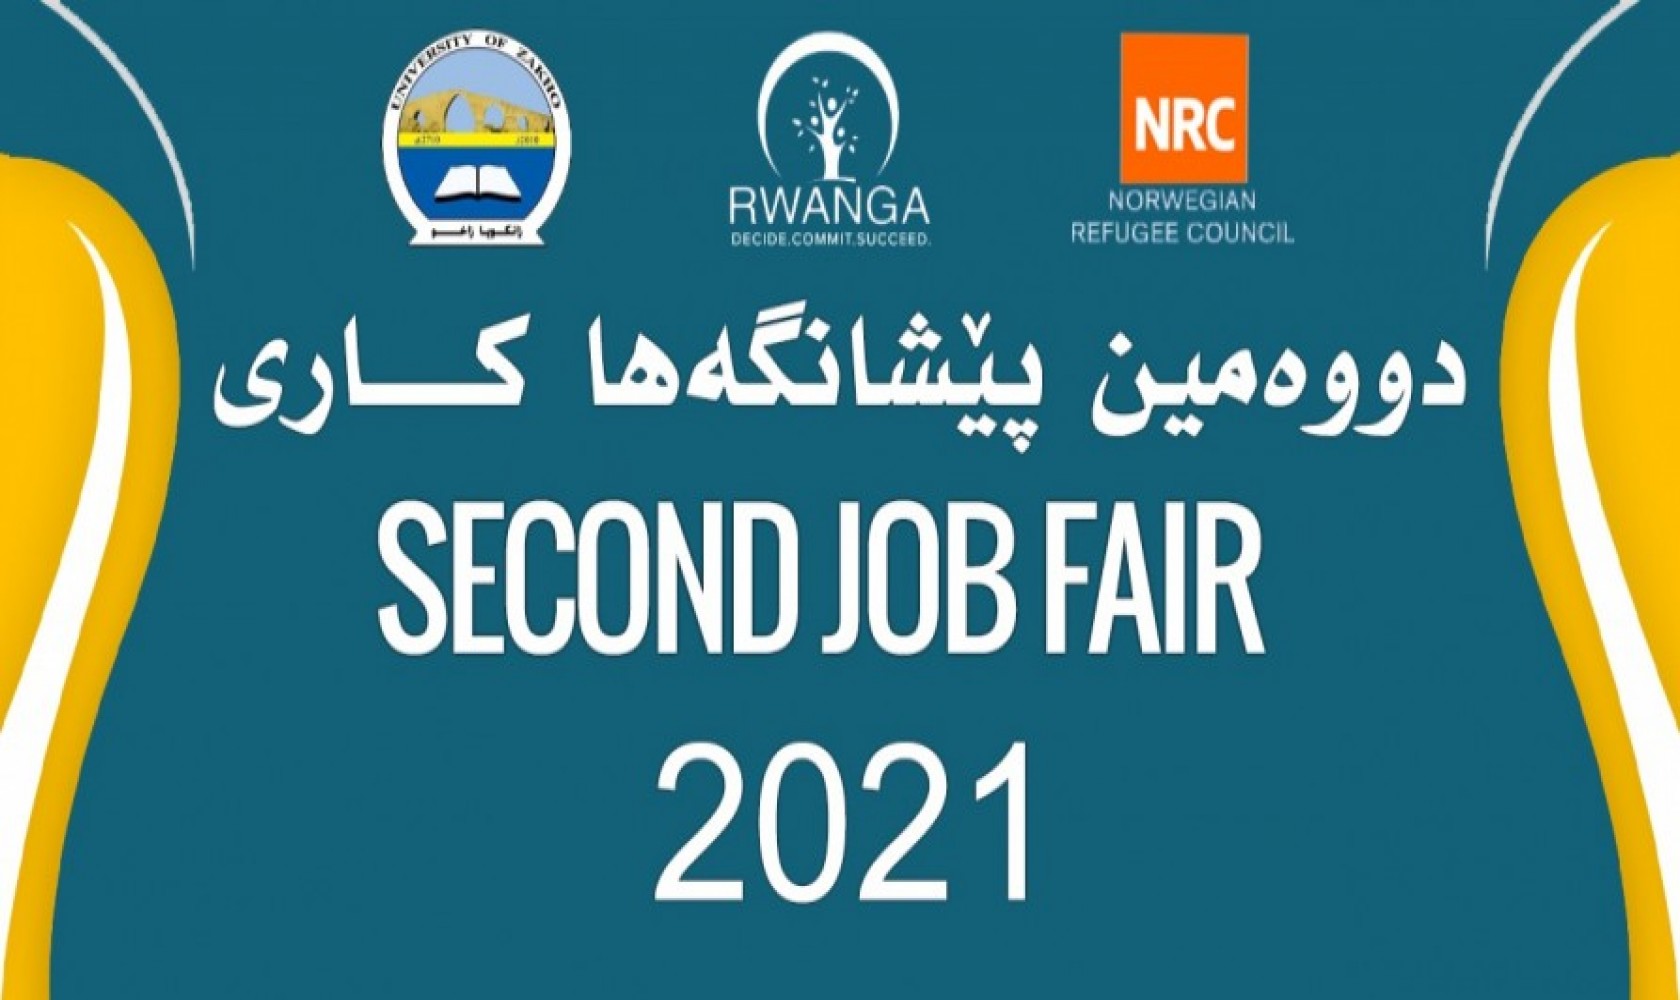 Second Job Fair, Monday, 25th of October - Career Development Centre